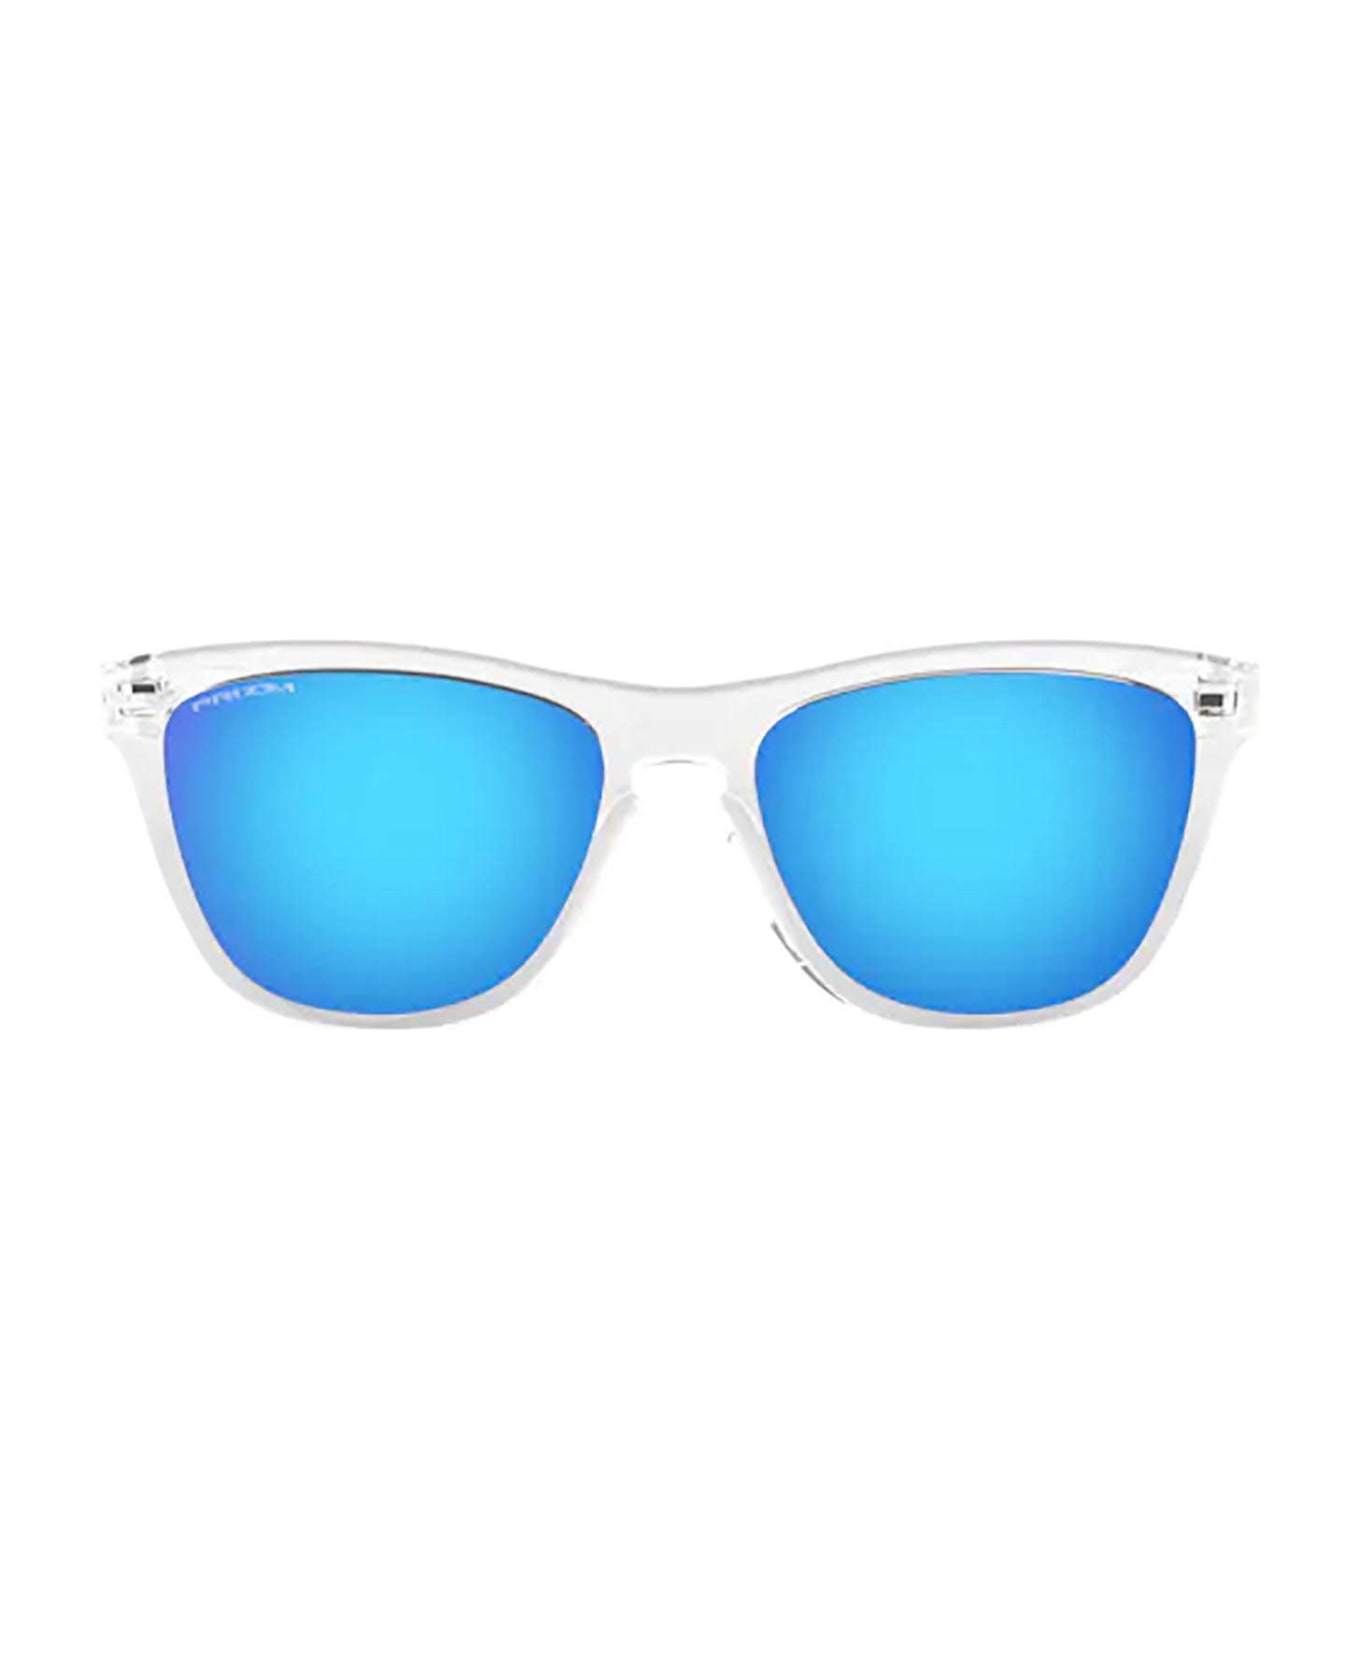 Oakley Oo9013 Crystal Clear Sunglasses - Crystal Clear